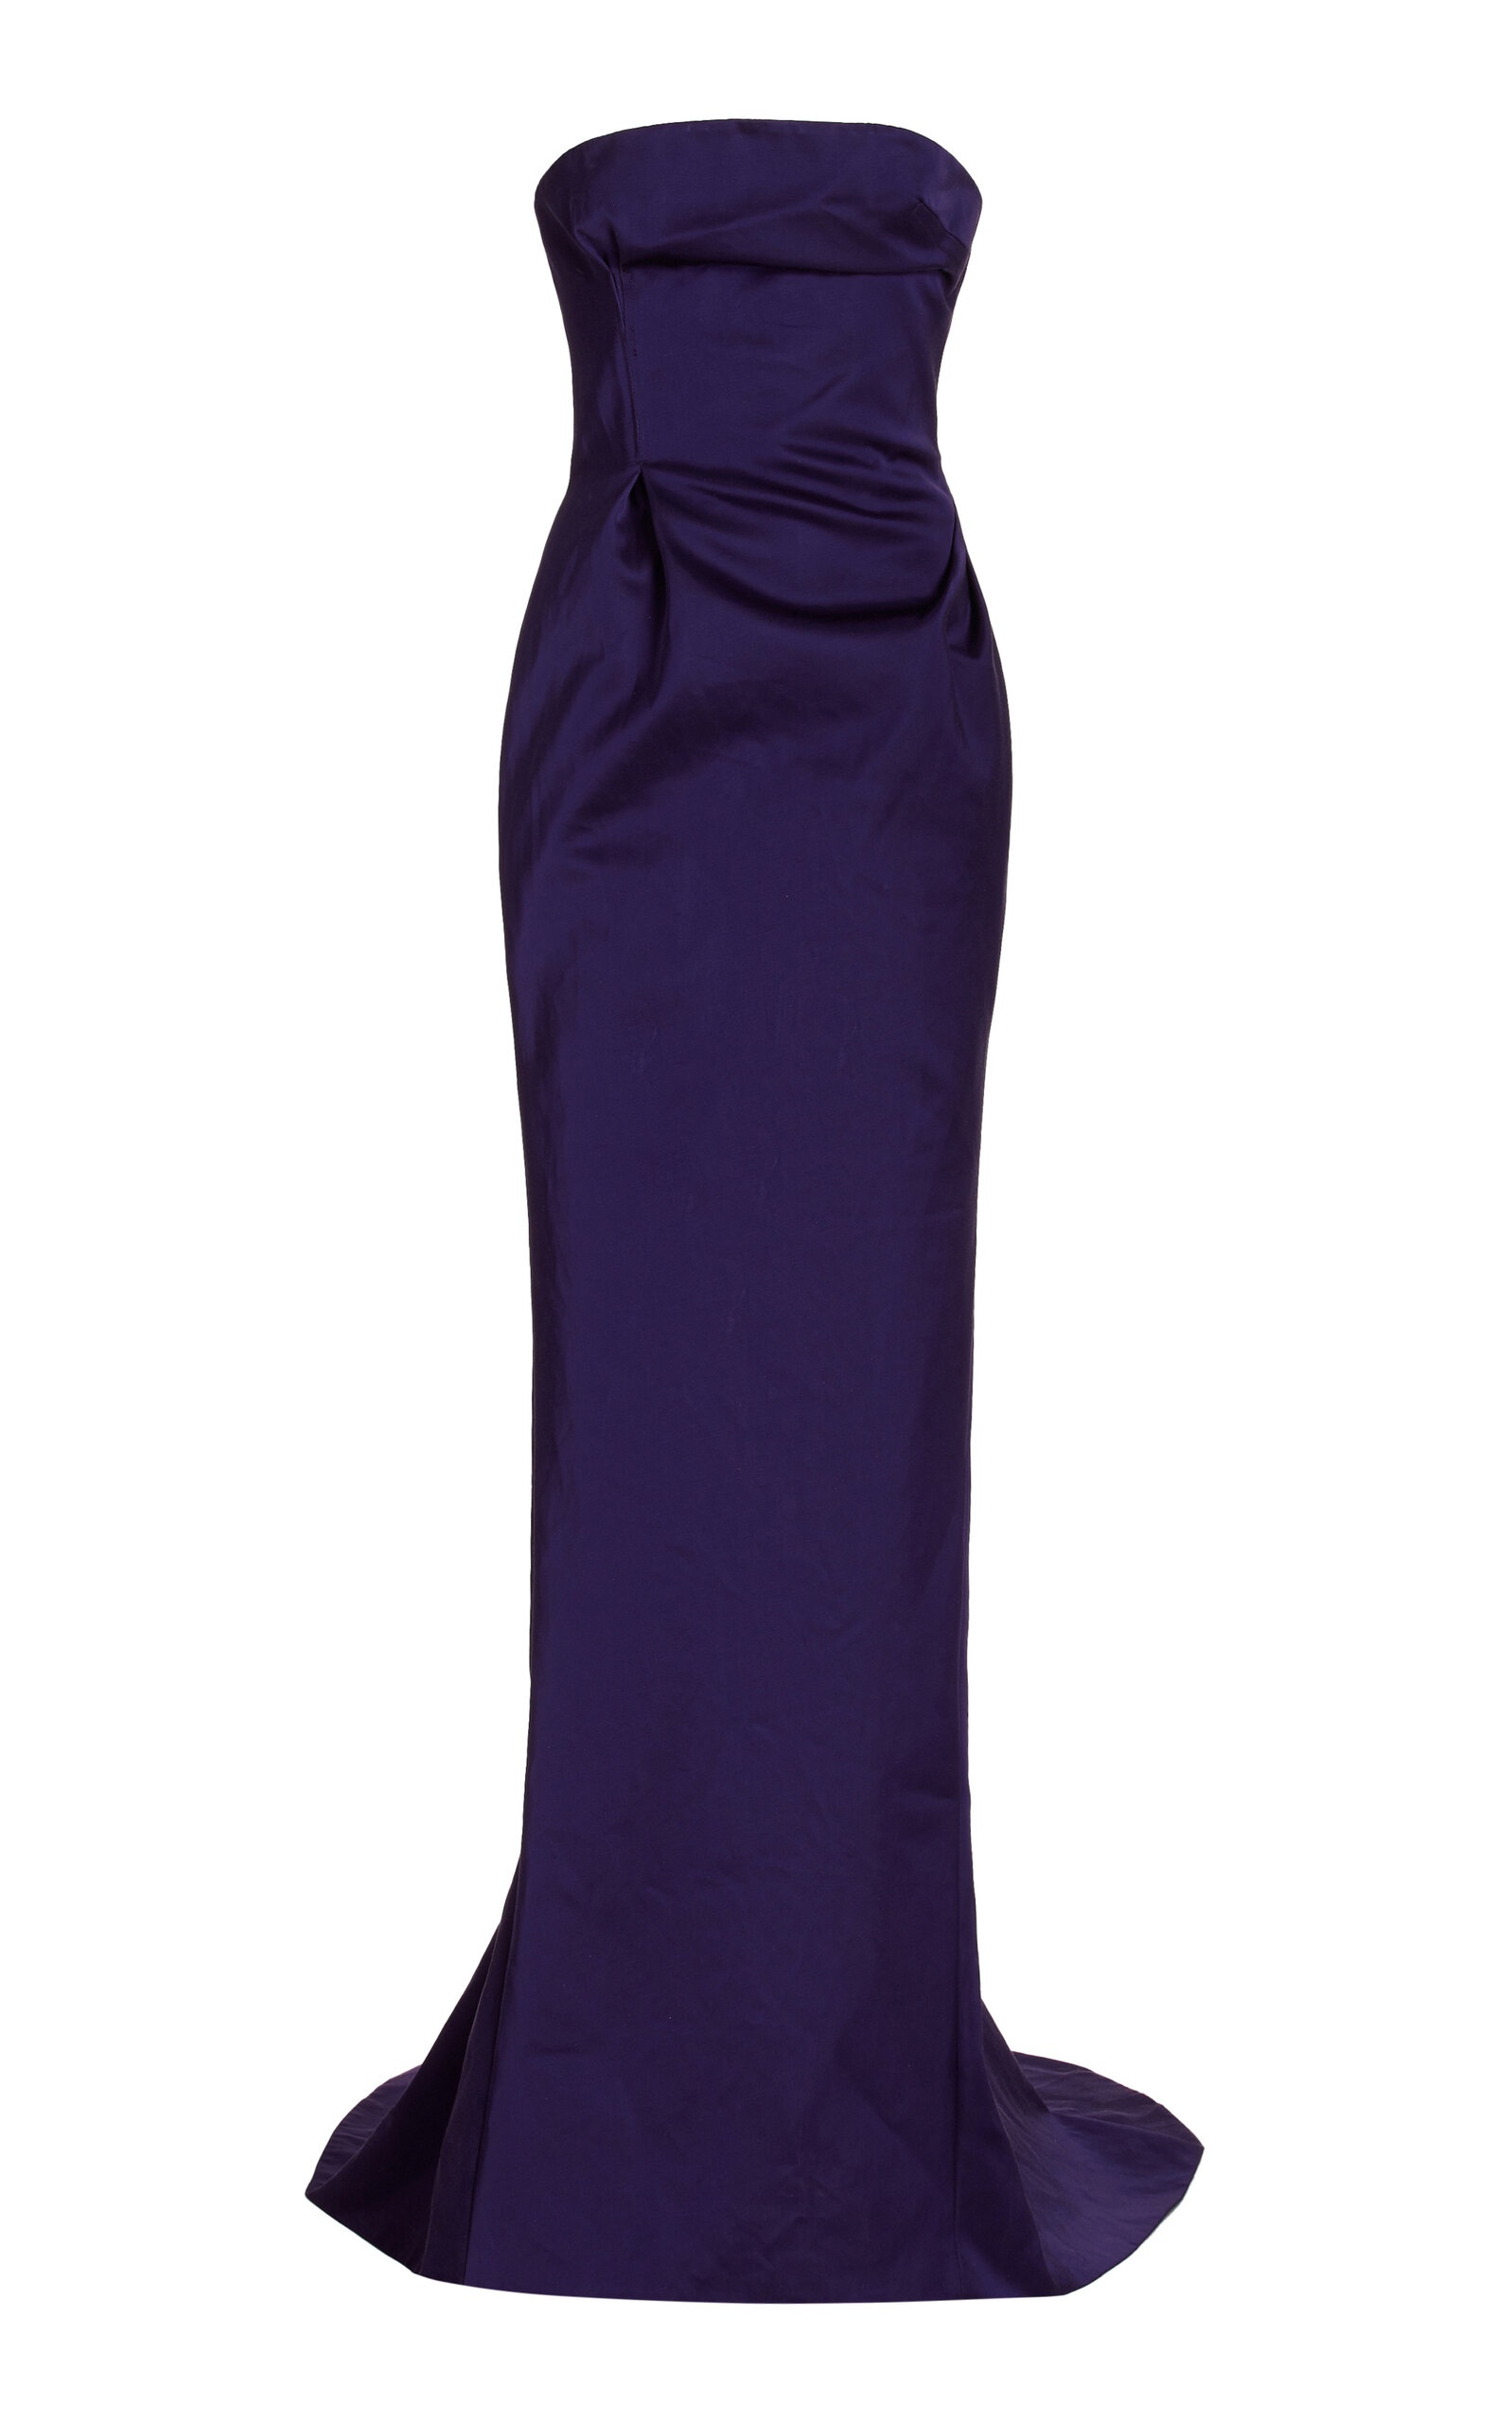 Satin Column Gown purple - 1